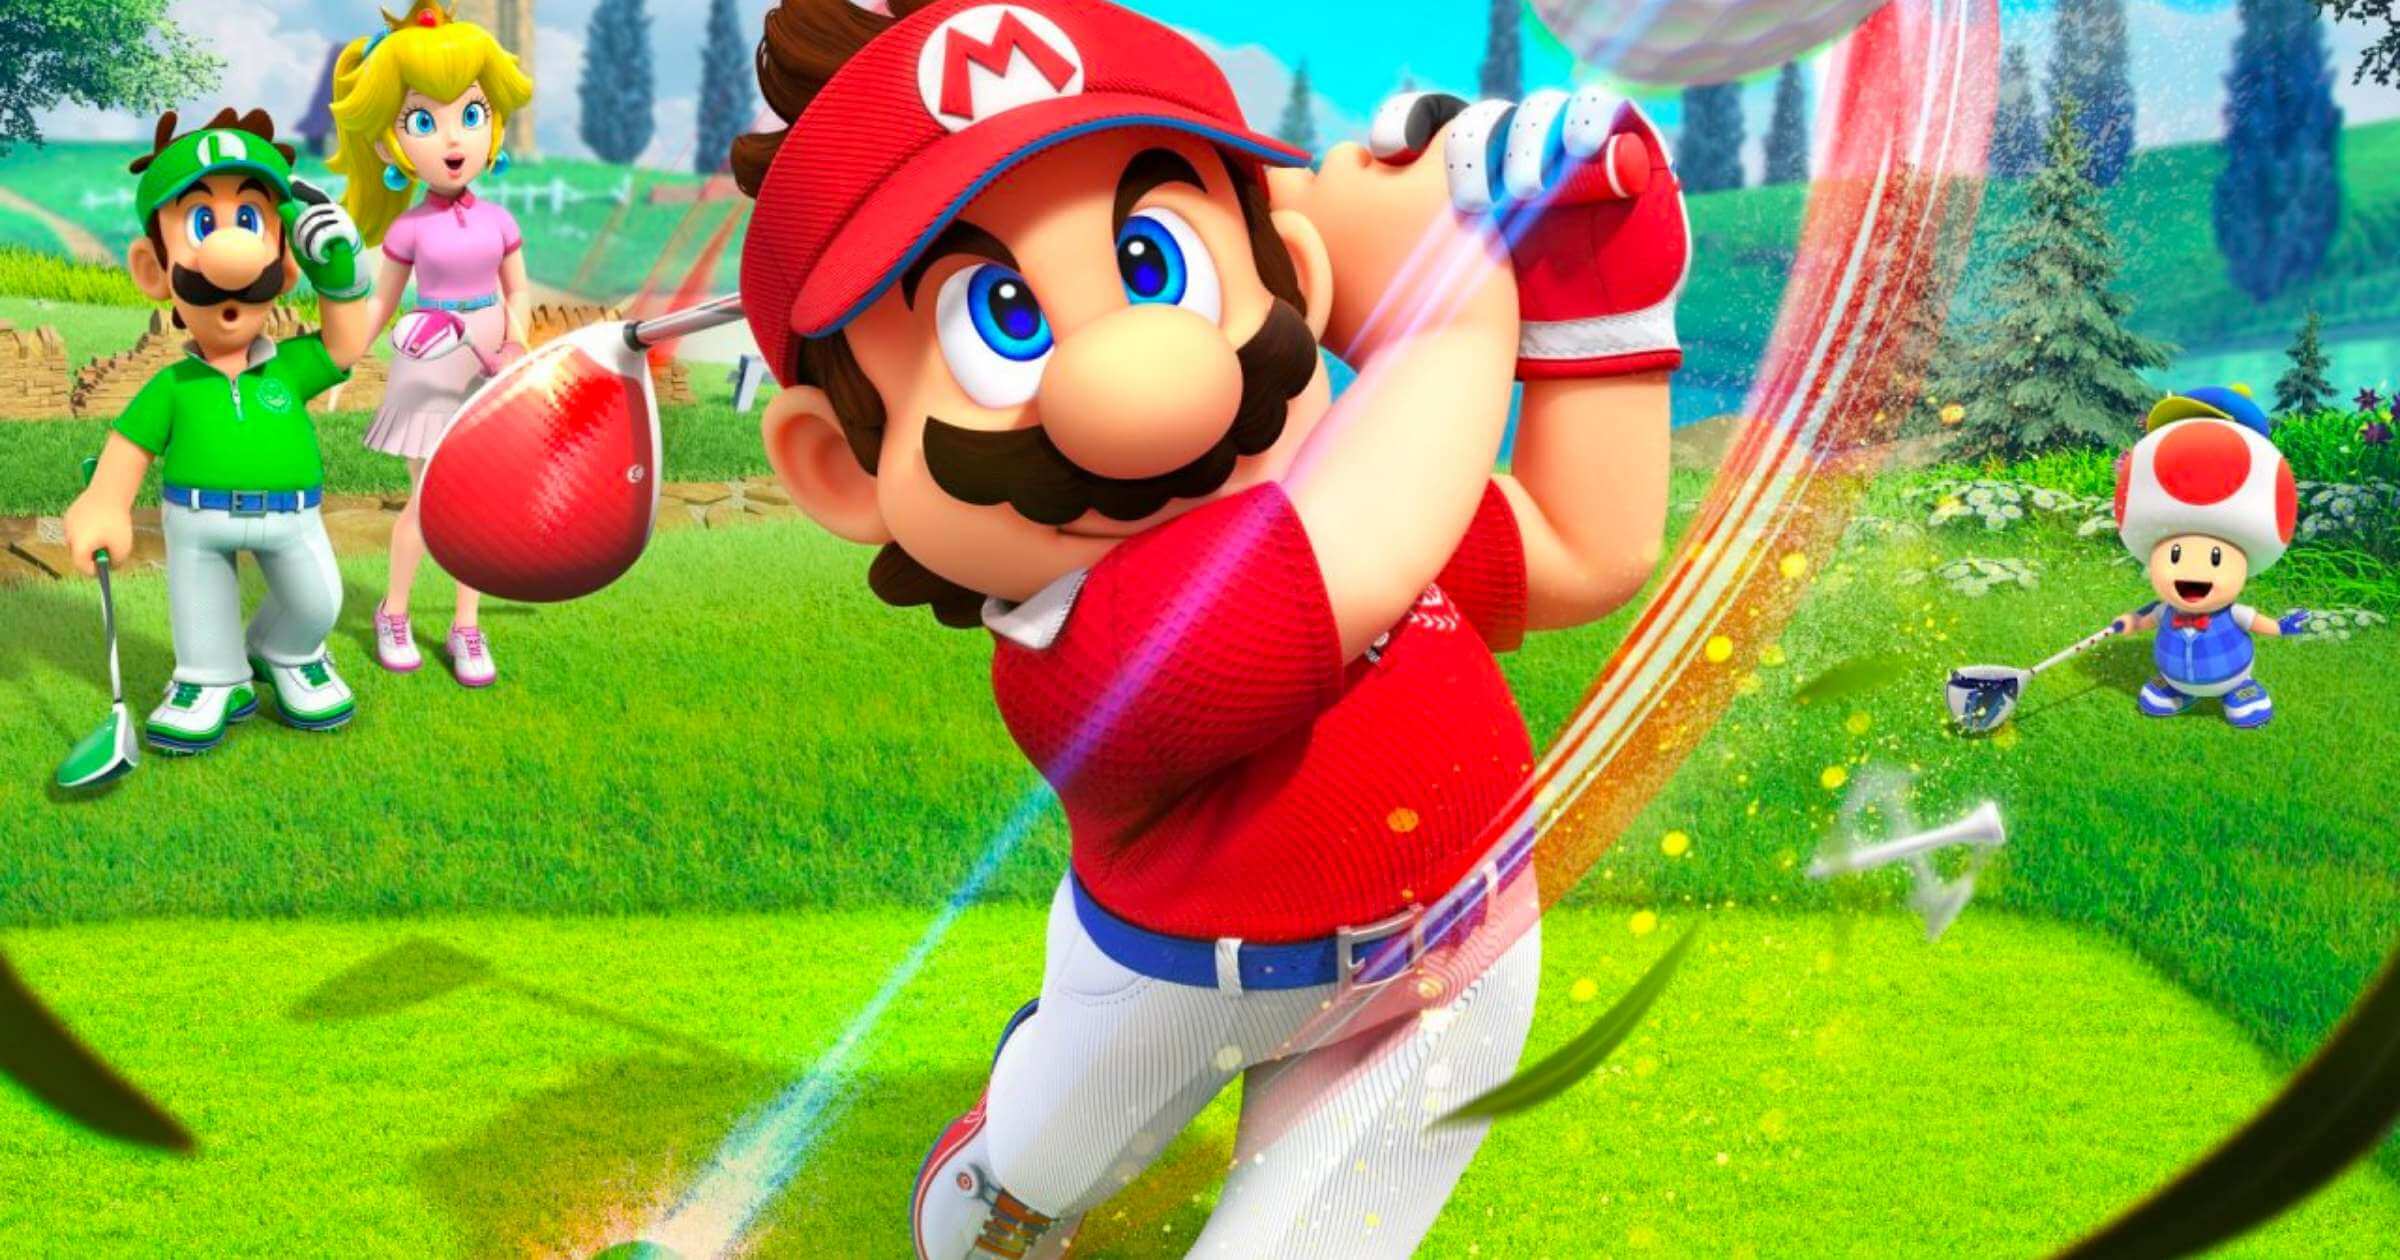 Mario Golf: Super Rush (Best Golf Game On Switch)